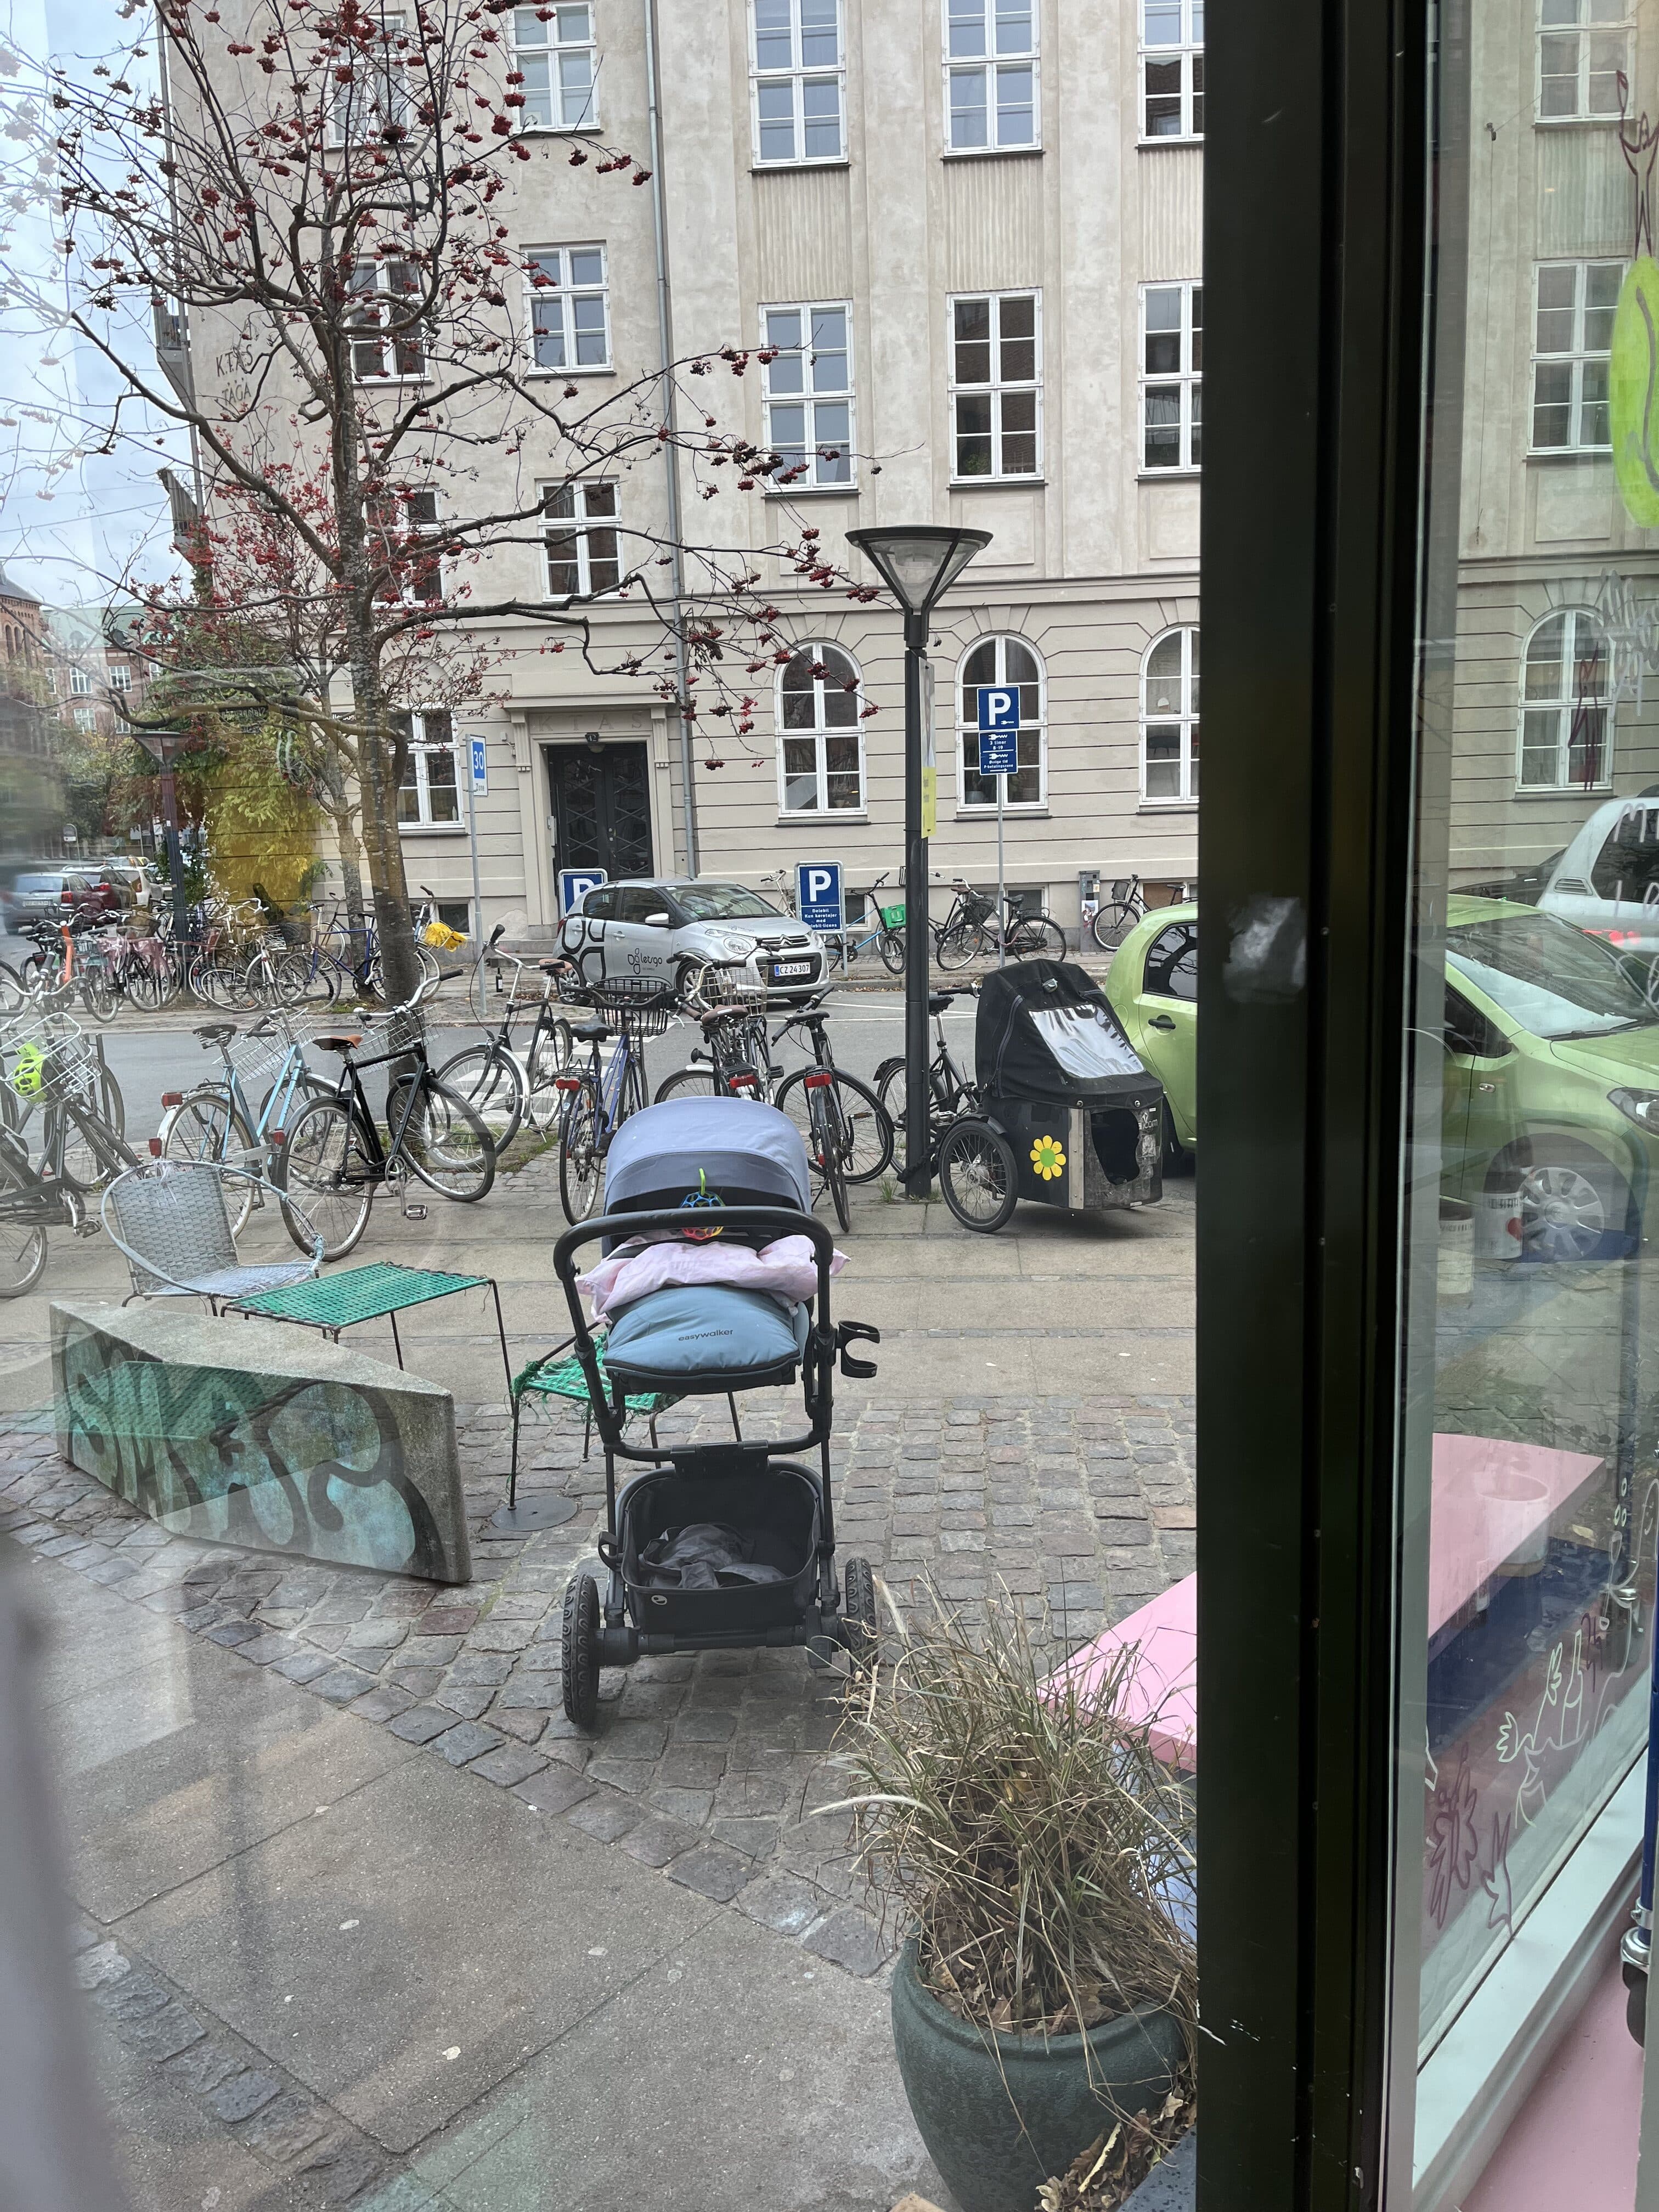 Stroller with a sleeping baby in Copenhagen